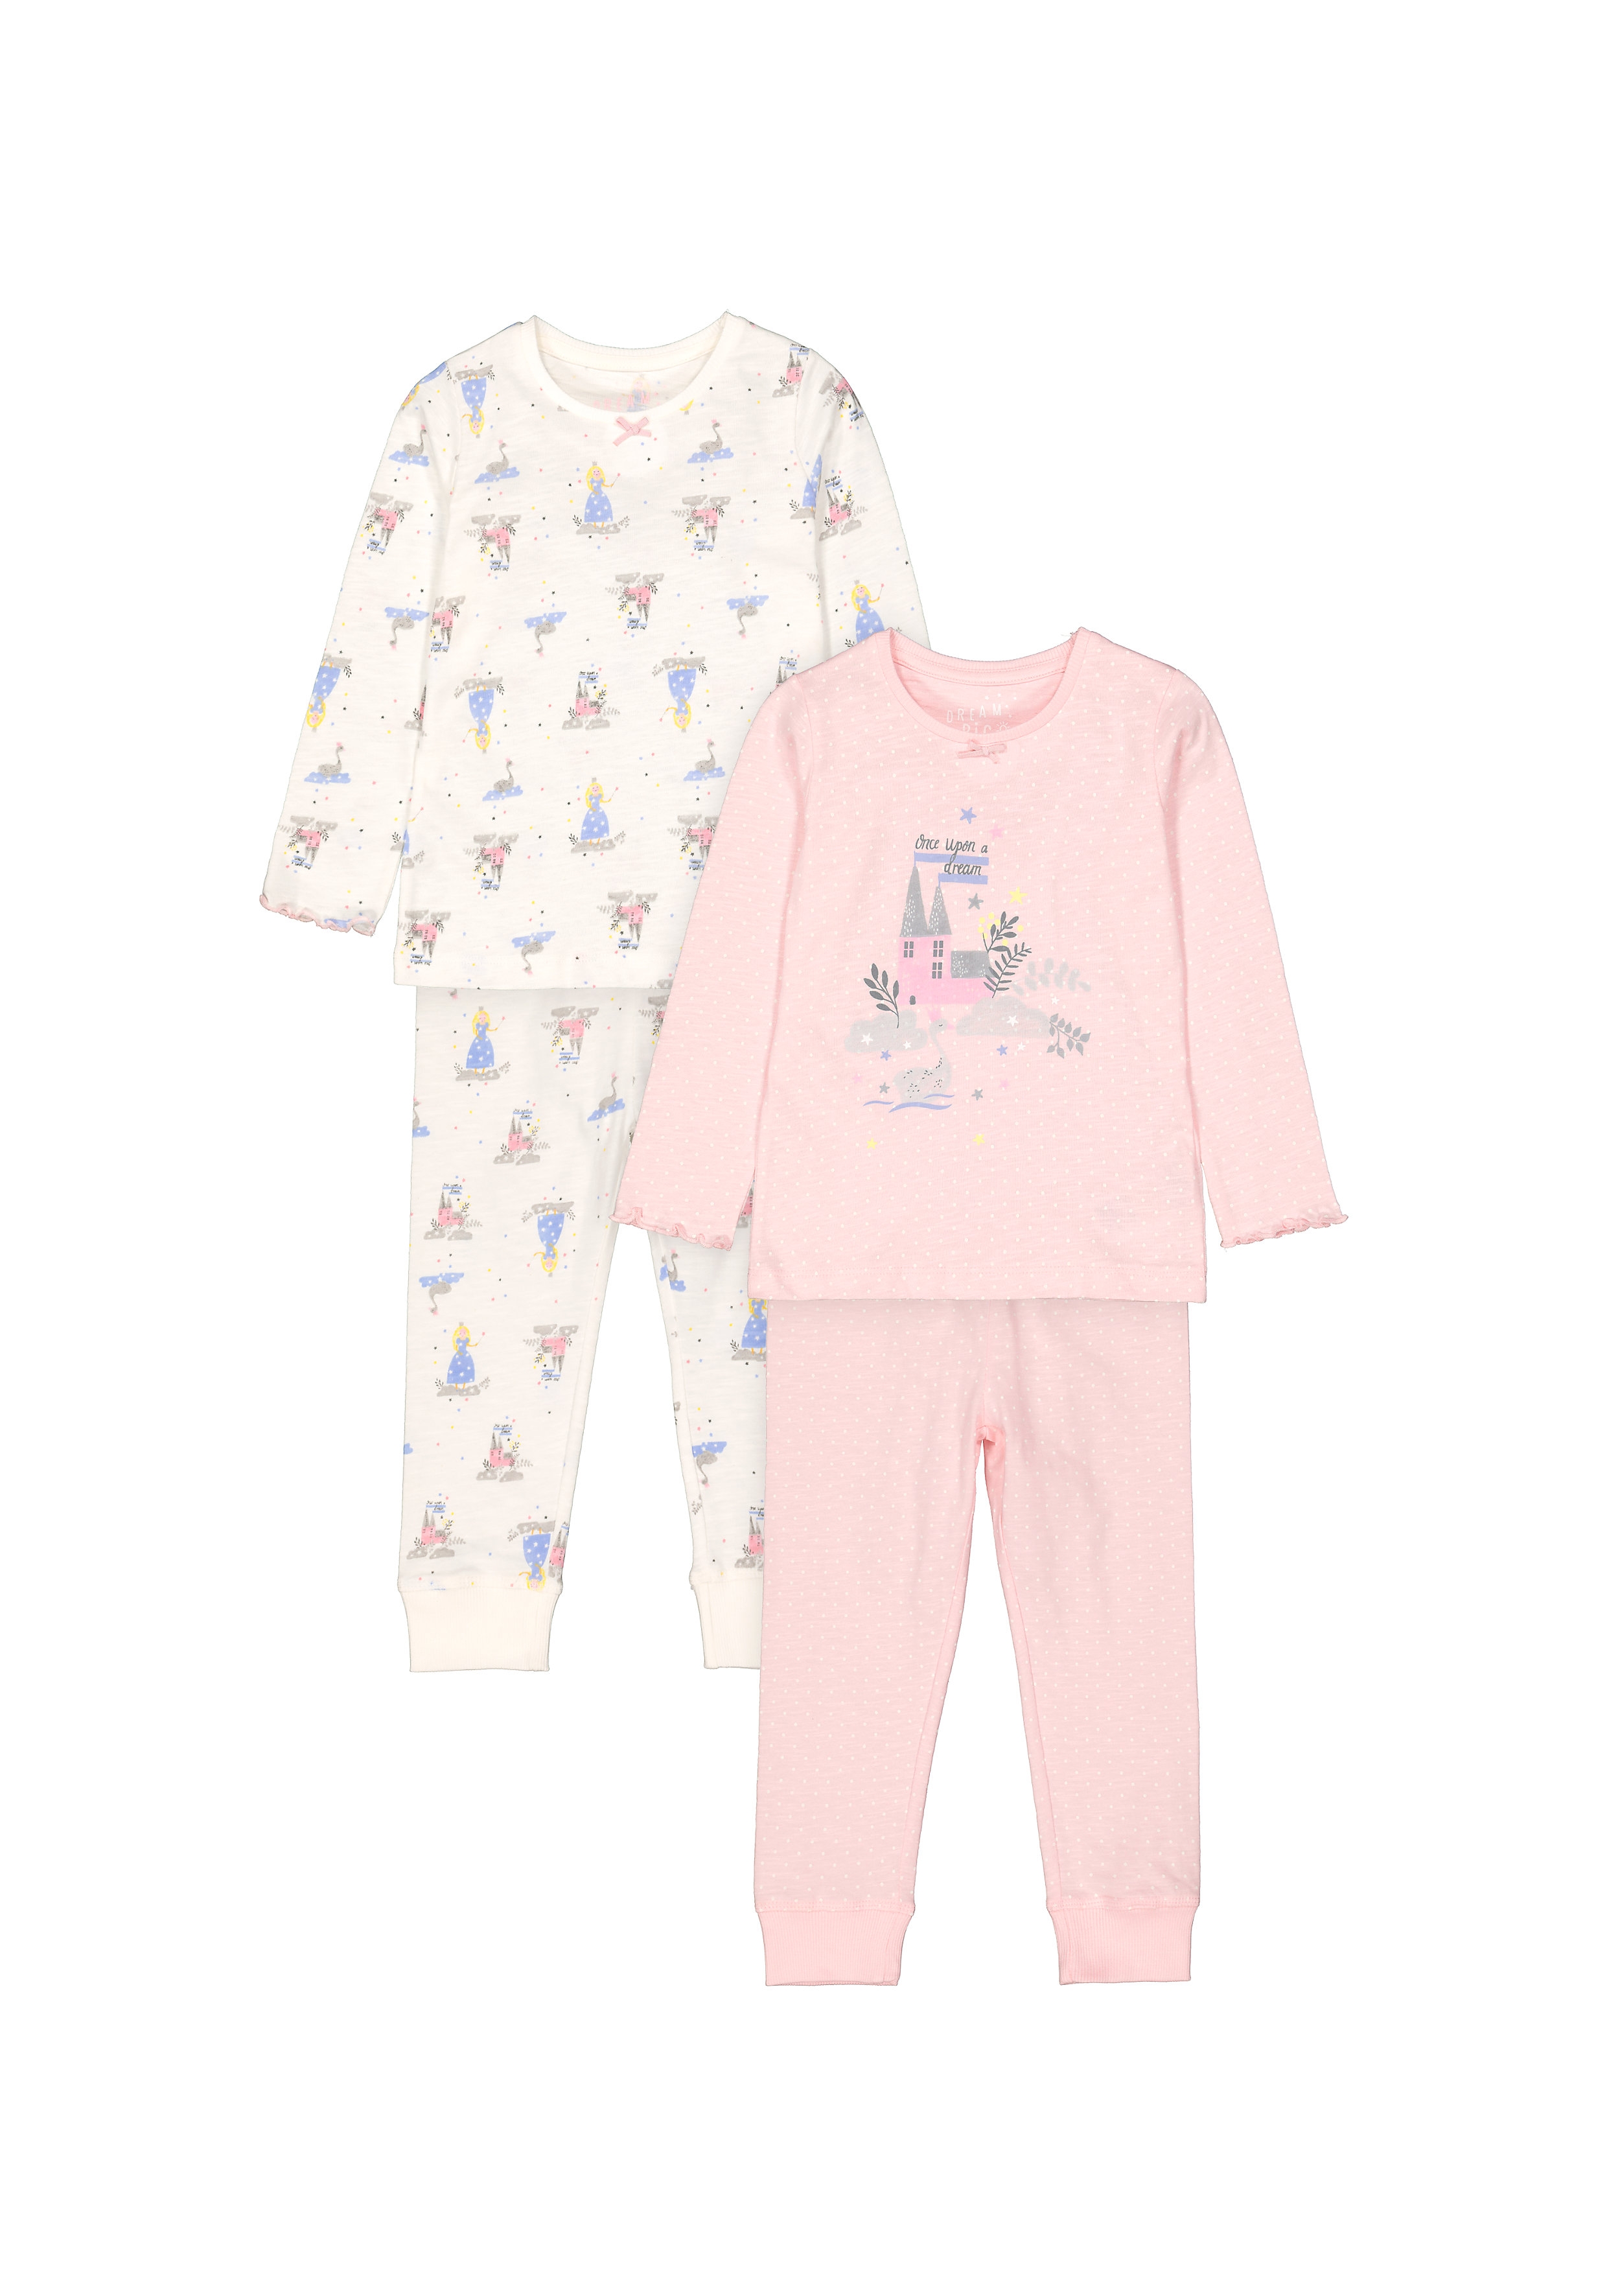 Mothercare | Girls Full Sleeves Pyjama Set Fairytale Print - Pack Of 2 - Pink Cream 0